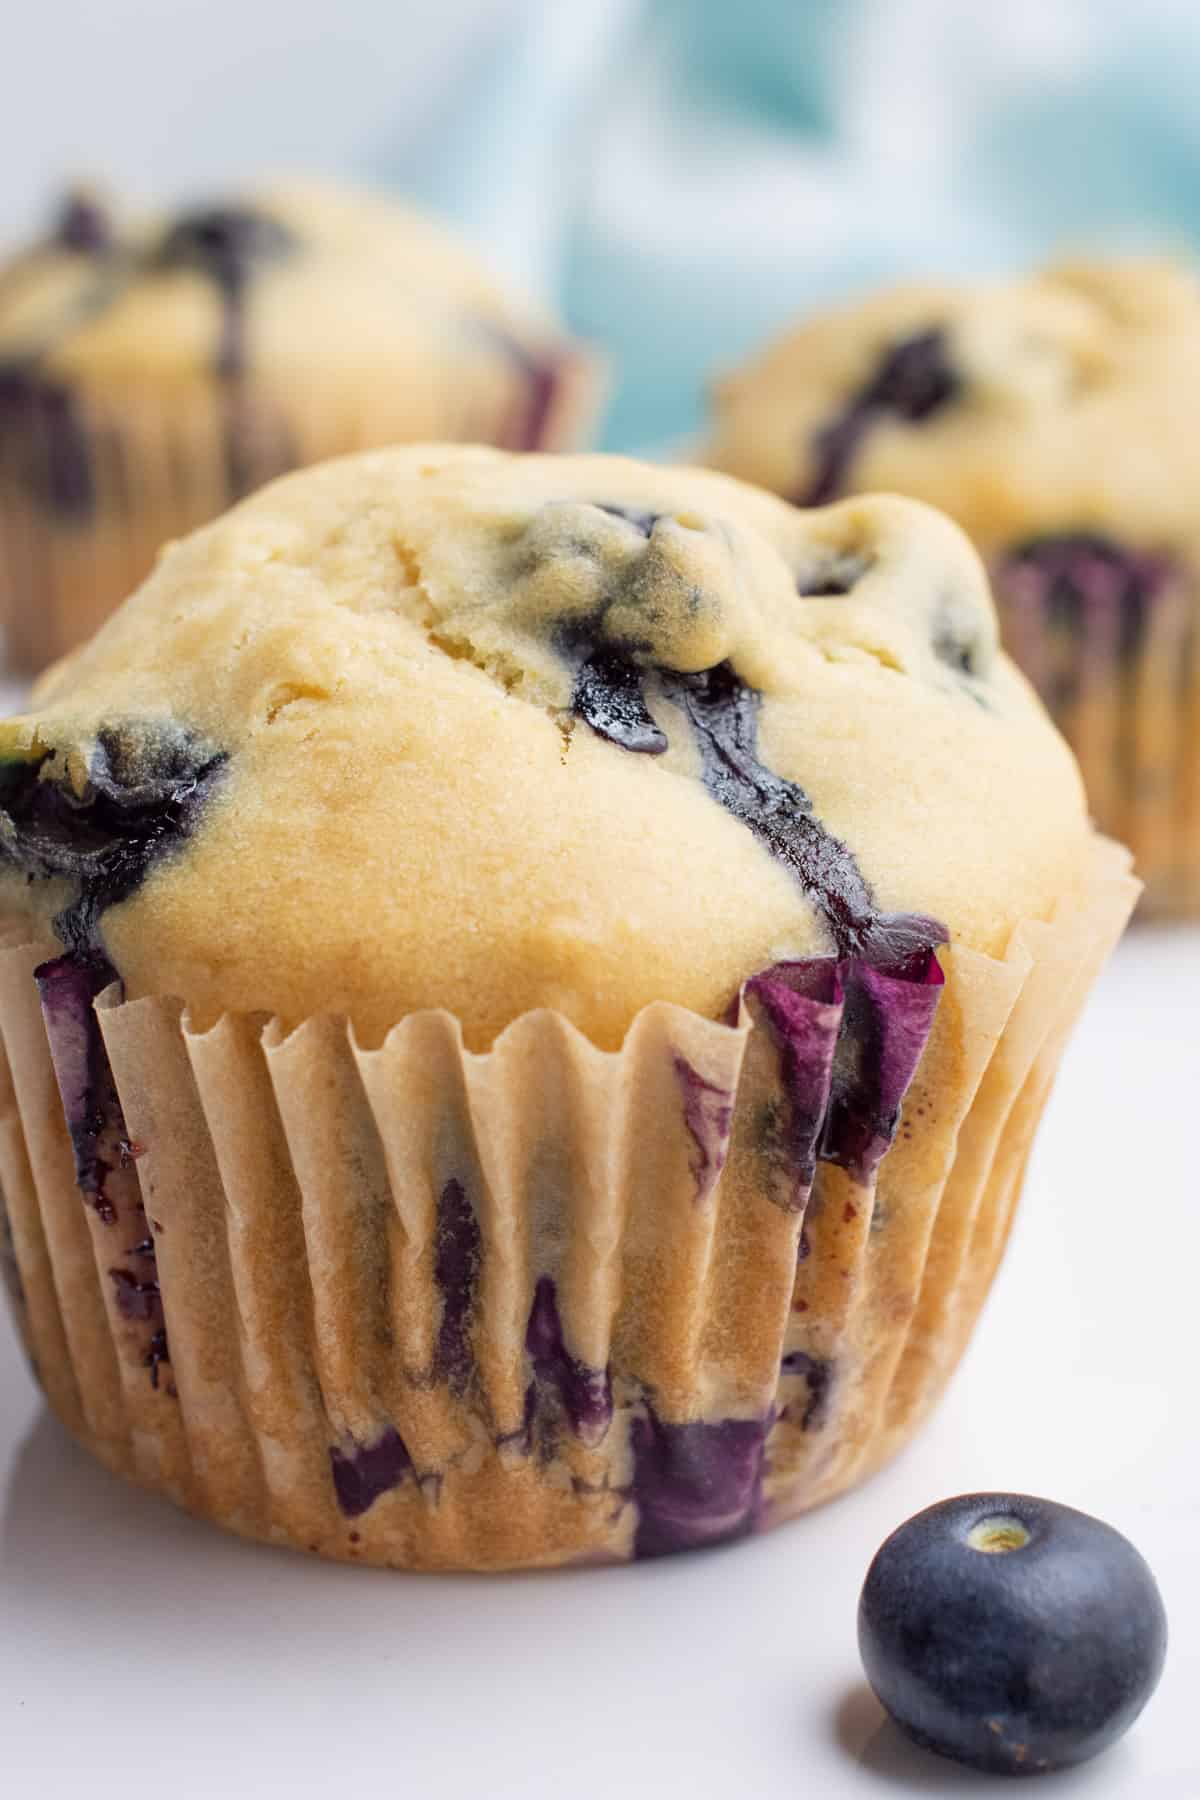 Close up of a vegan blueberry muffin in a tan muffin paper.